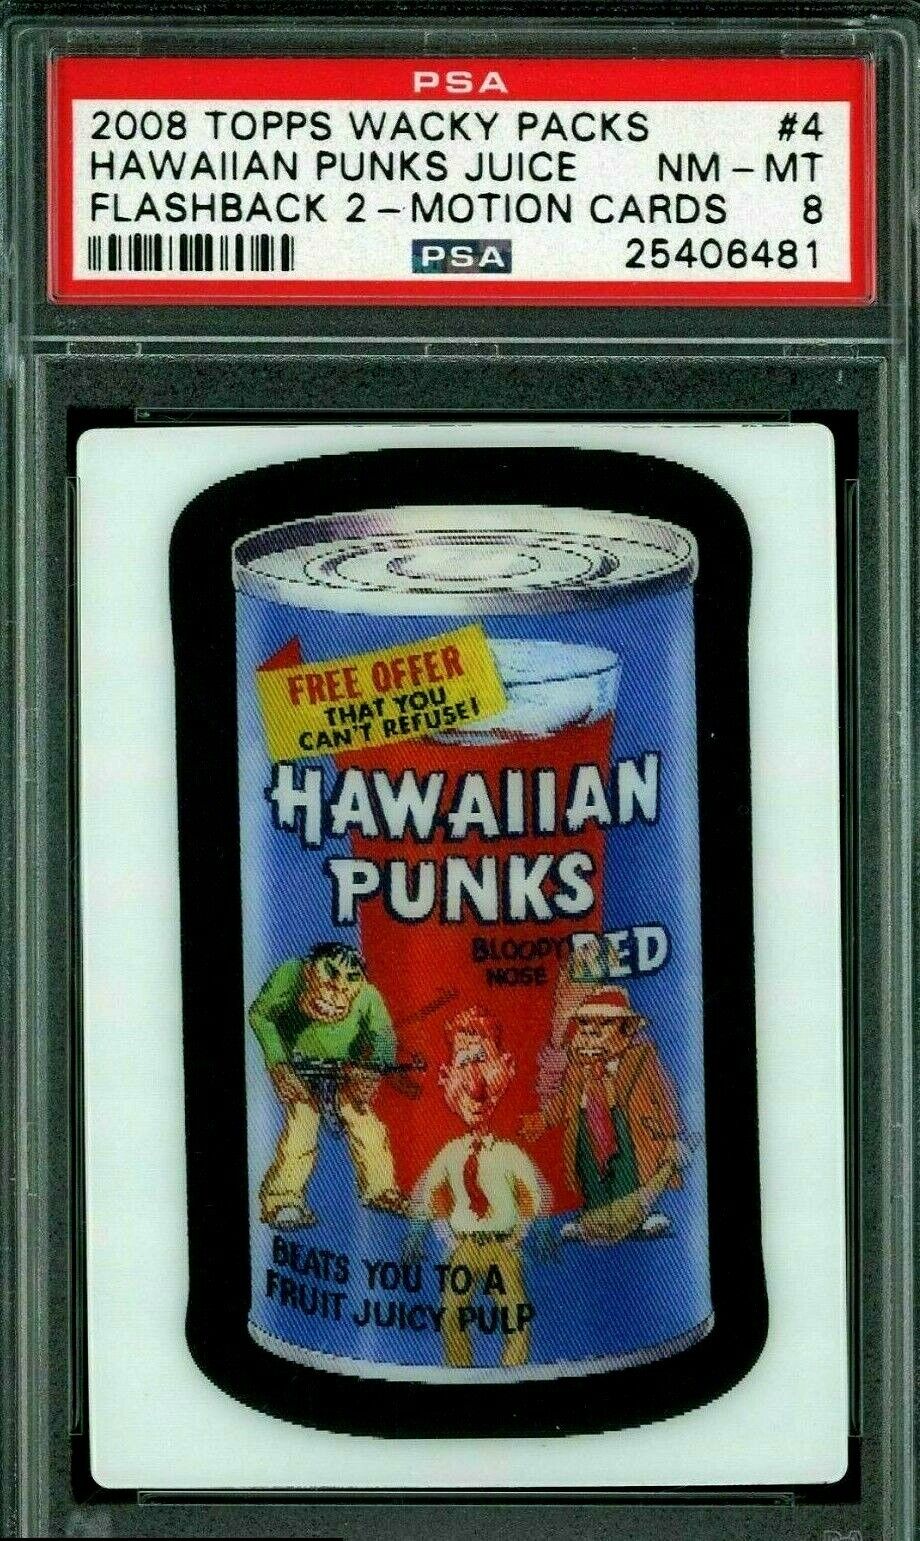 Pop 2 - 2008 Topps Wacky Flashback 2 Motion Cards #4 Hawaiian Punks Juice PSA 8